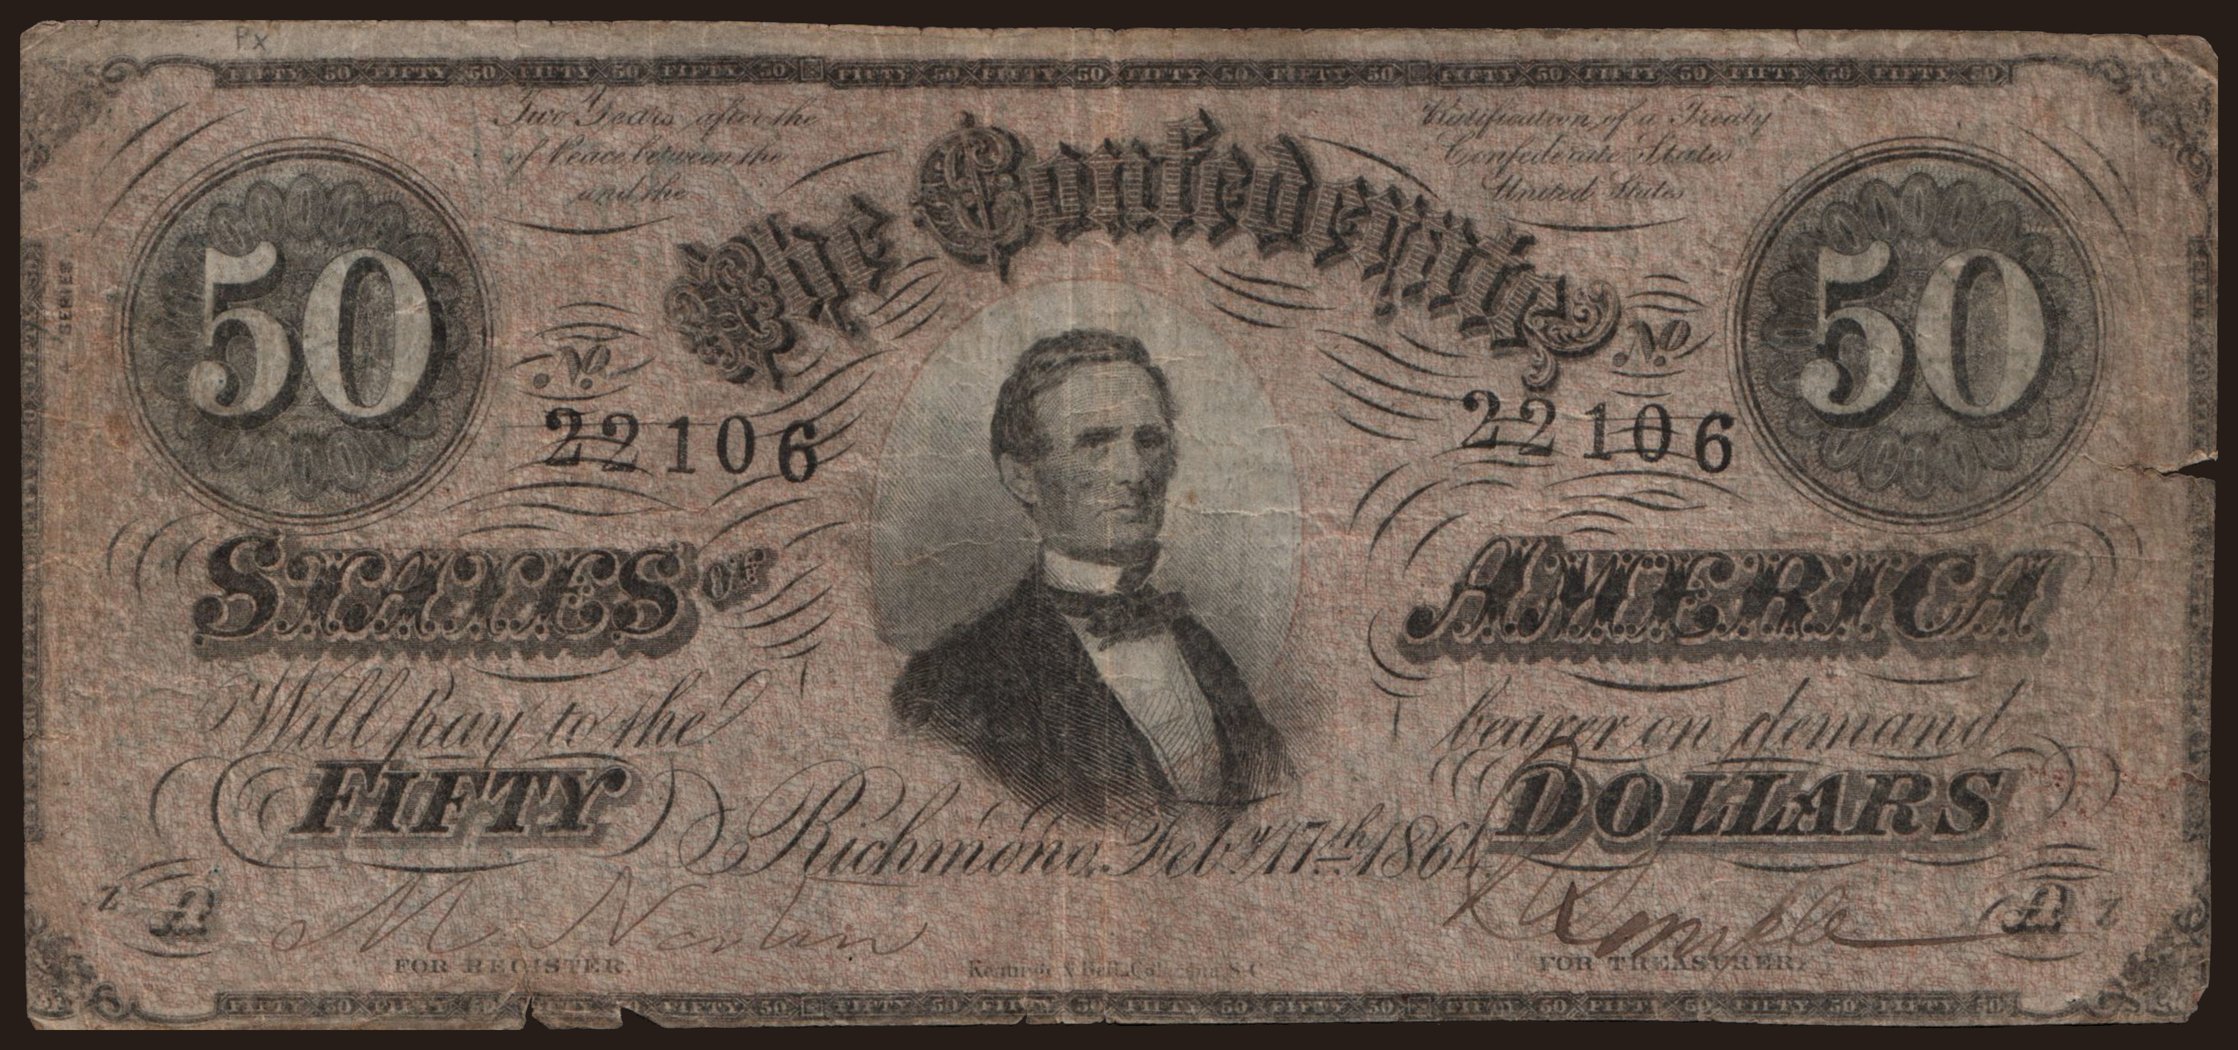 CSA, 50 dollars, 1864